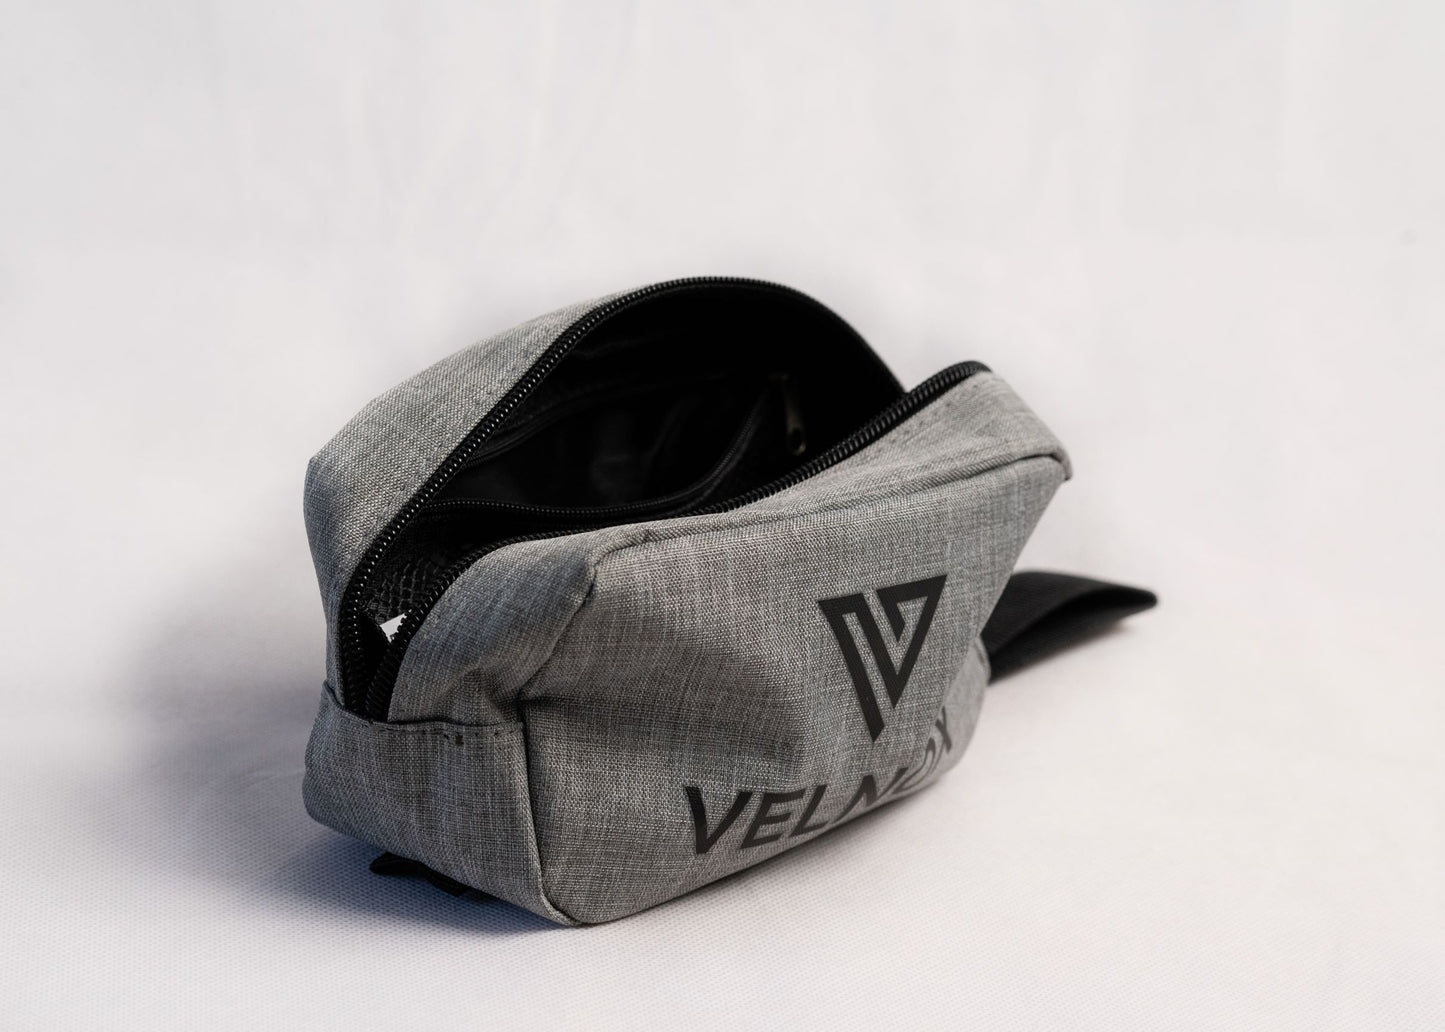 Velnox Gear Bag